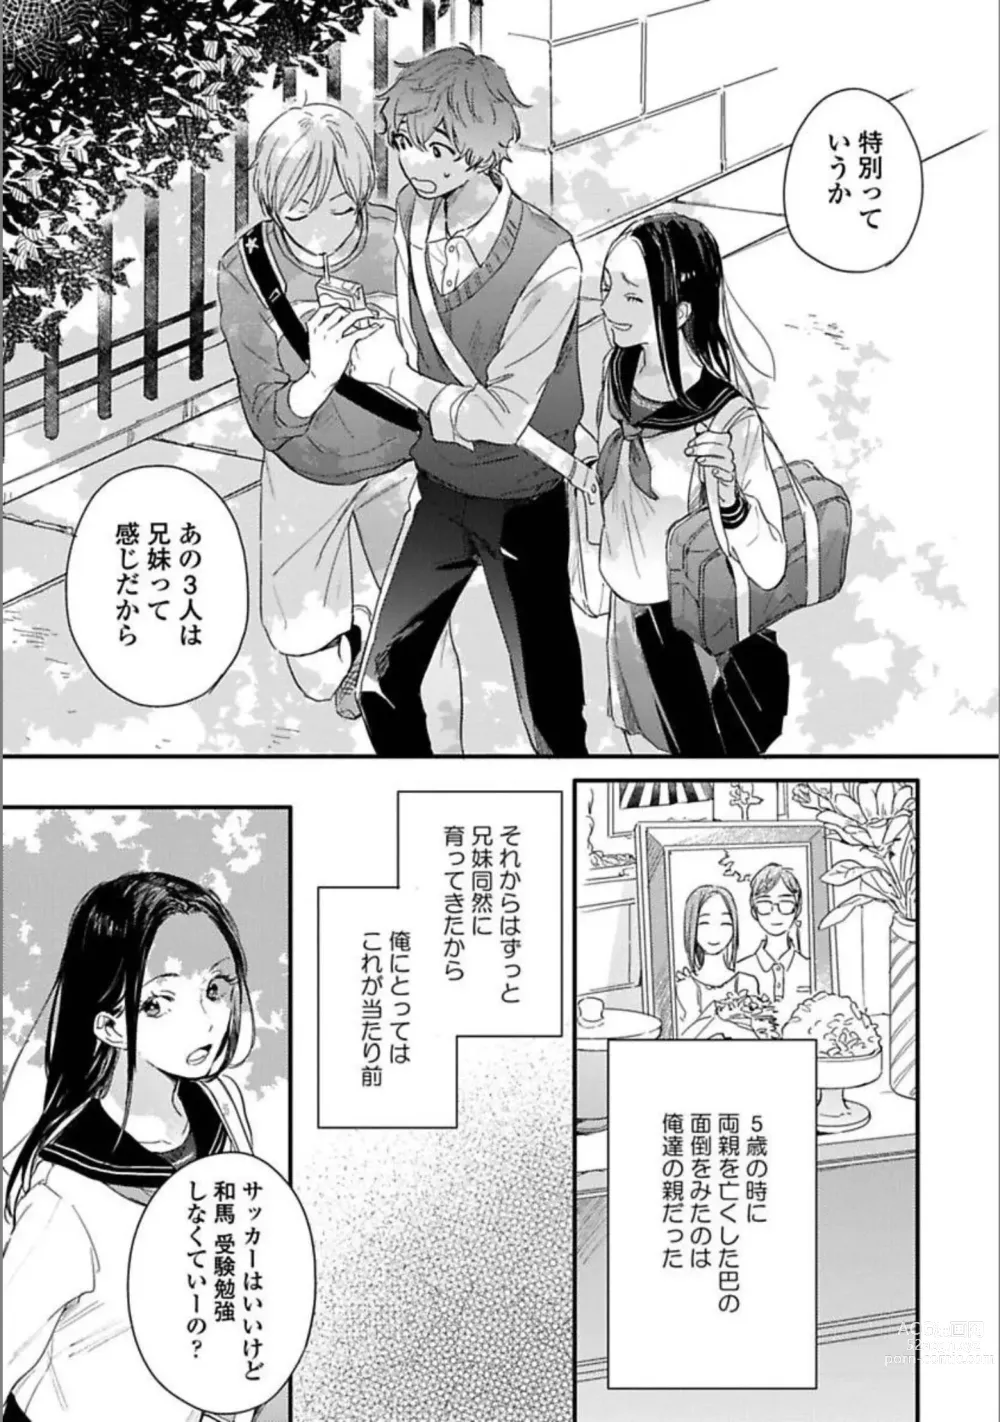 Page 13 of manga Itsuka Koi ni Naru Made Jou